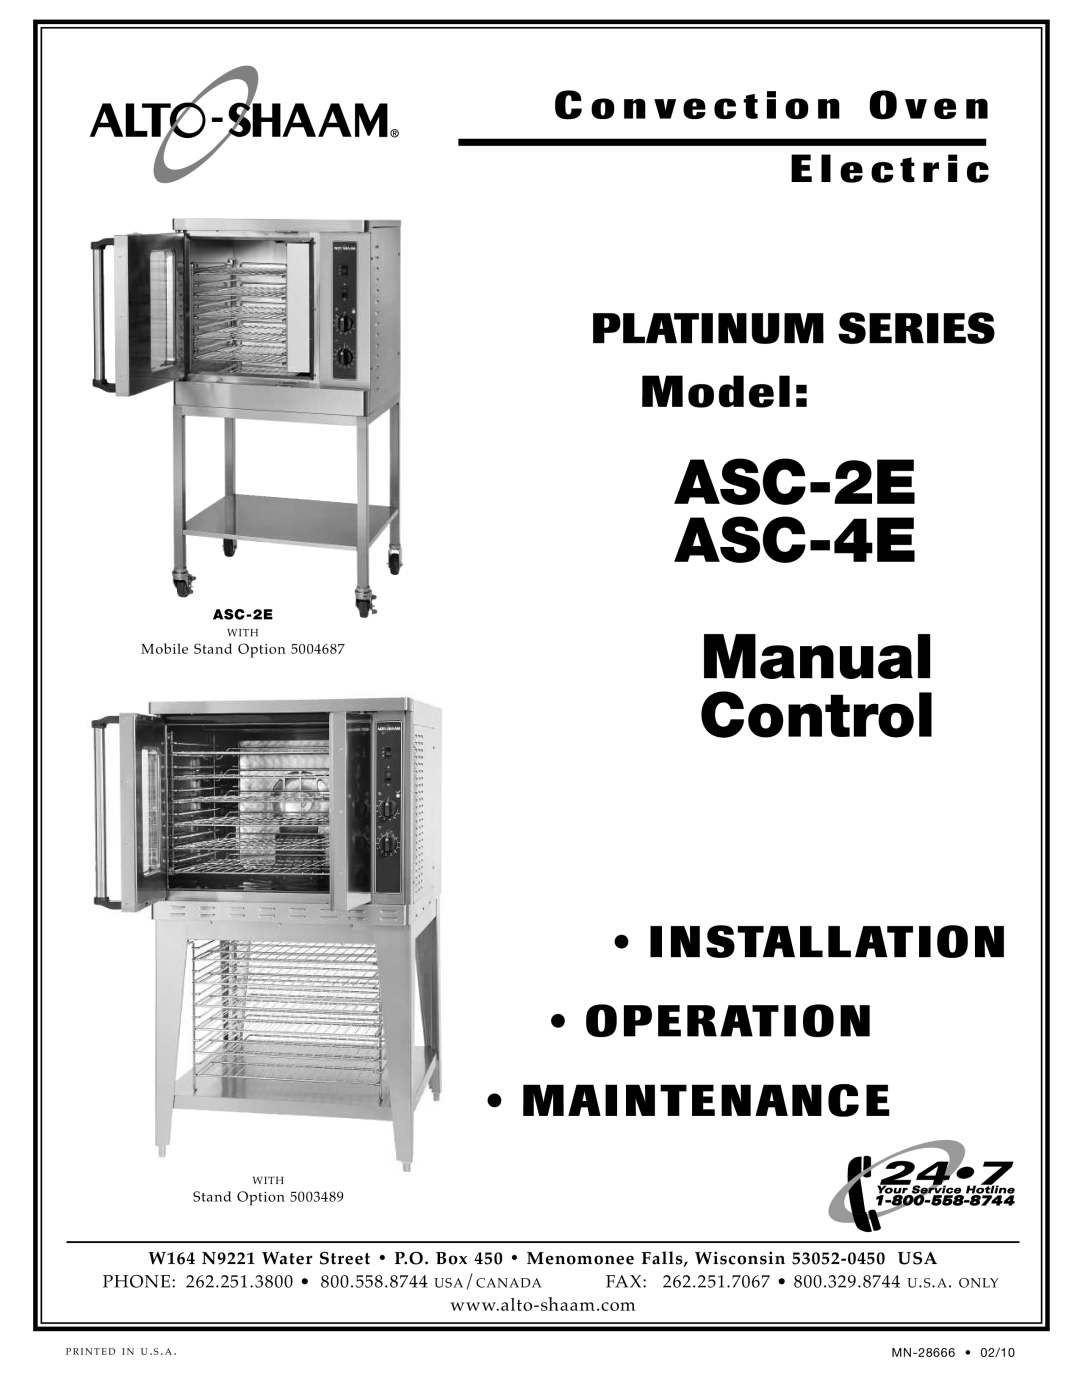 Alto-Shaam Convection Oven manual Model, Installation Operation Maintenance, ASC-2E ASC-4E Manual Control, with 